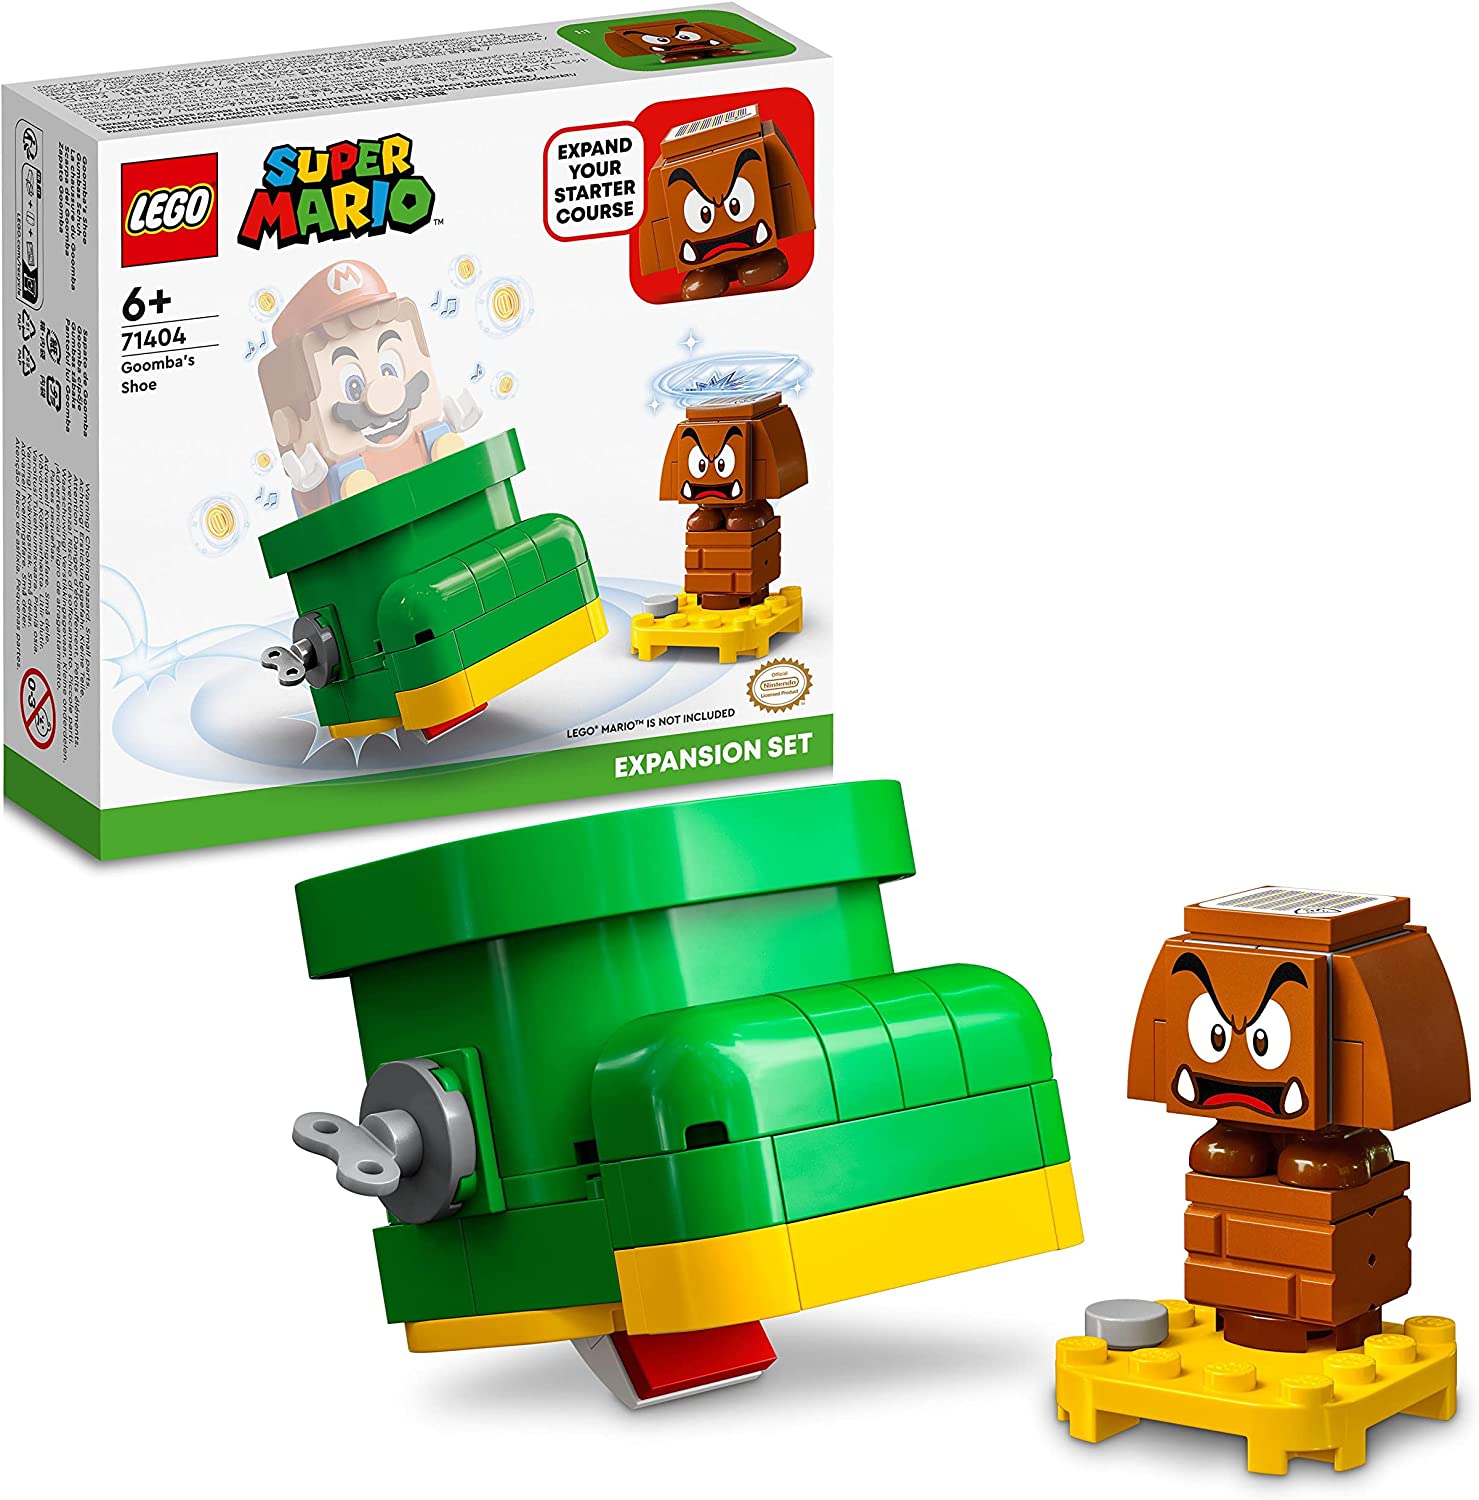 LEGO 71404 Super Mario Gumbas Shoe - Expansion Set, Toy to Combine with Mario, Luigi or Peach Starter Set, with Gumba Figure